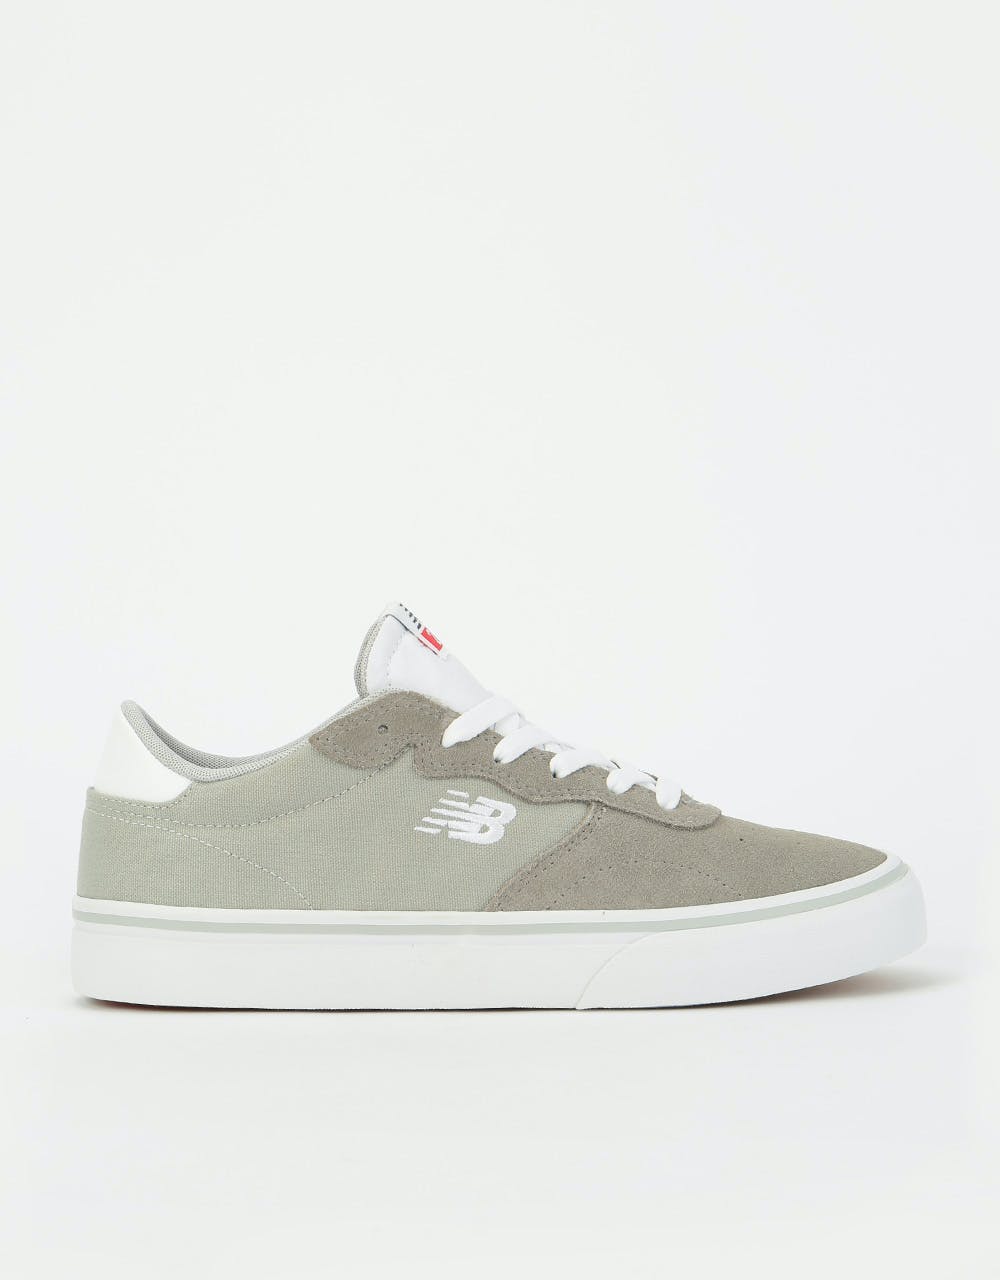 New Balance AM 232 Skate Shoes - Grey/White